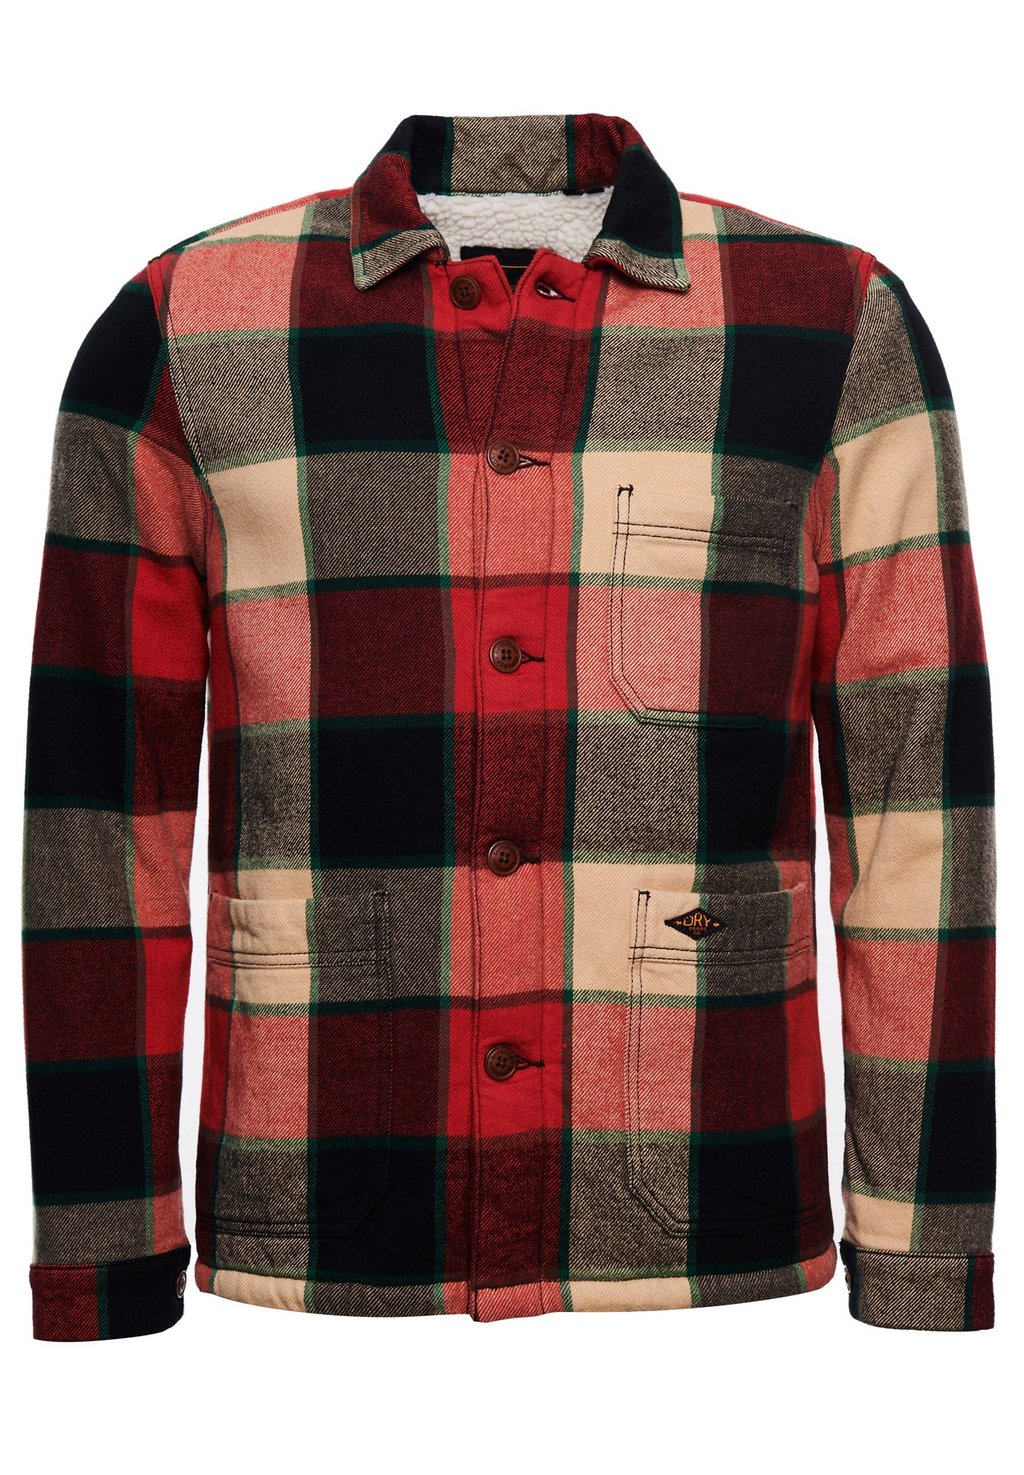 Рубашка OVERSIZED UTILITY CHECK OVER Superdry, красный рубашка edited oversized check черный кремовый